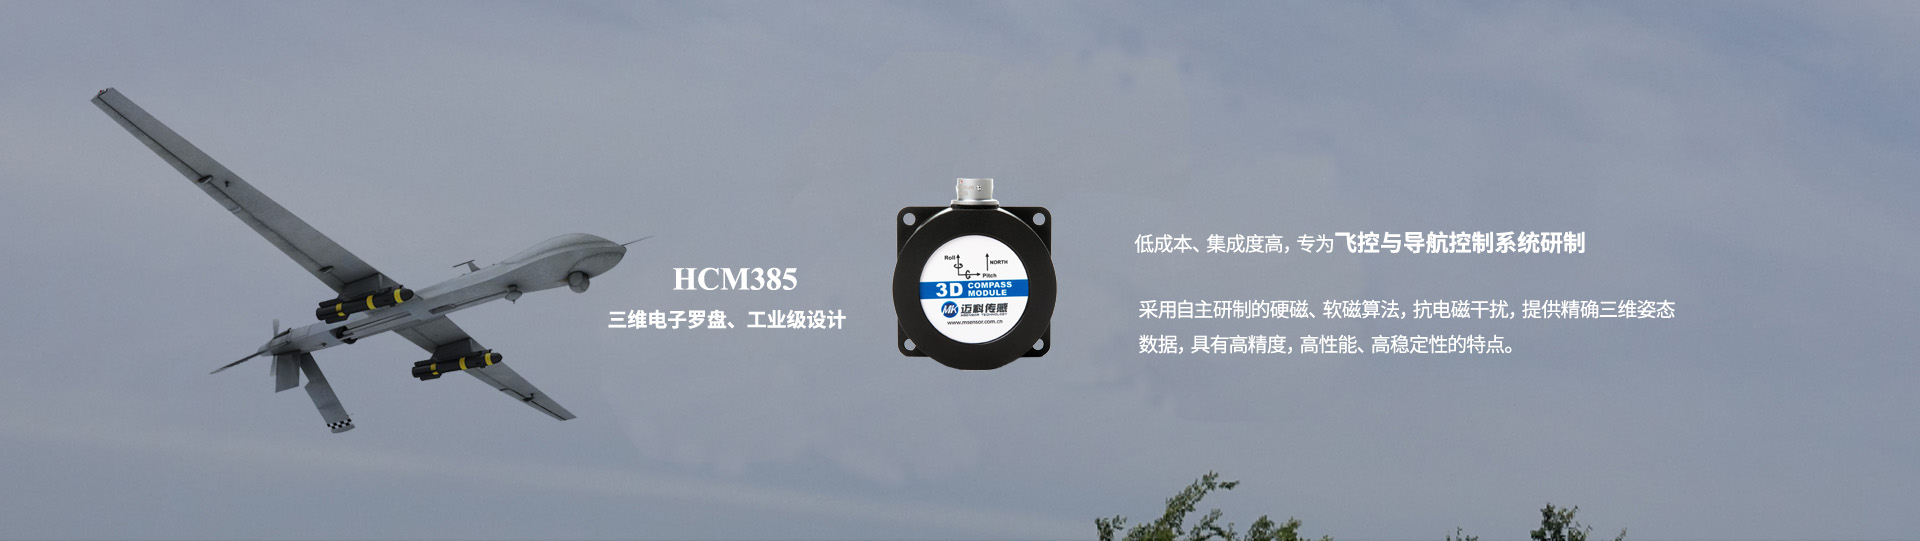 HCM385三維電子羅盤(pán)飛控與導航控制